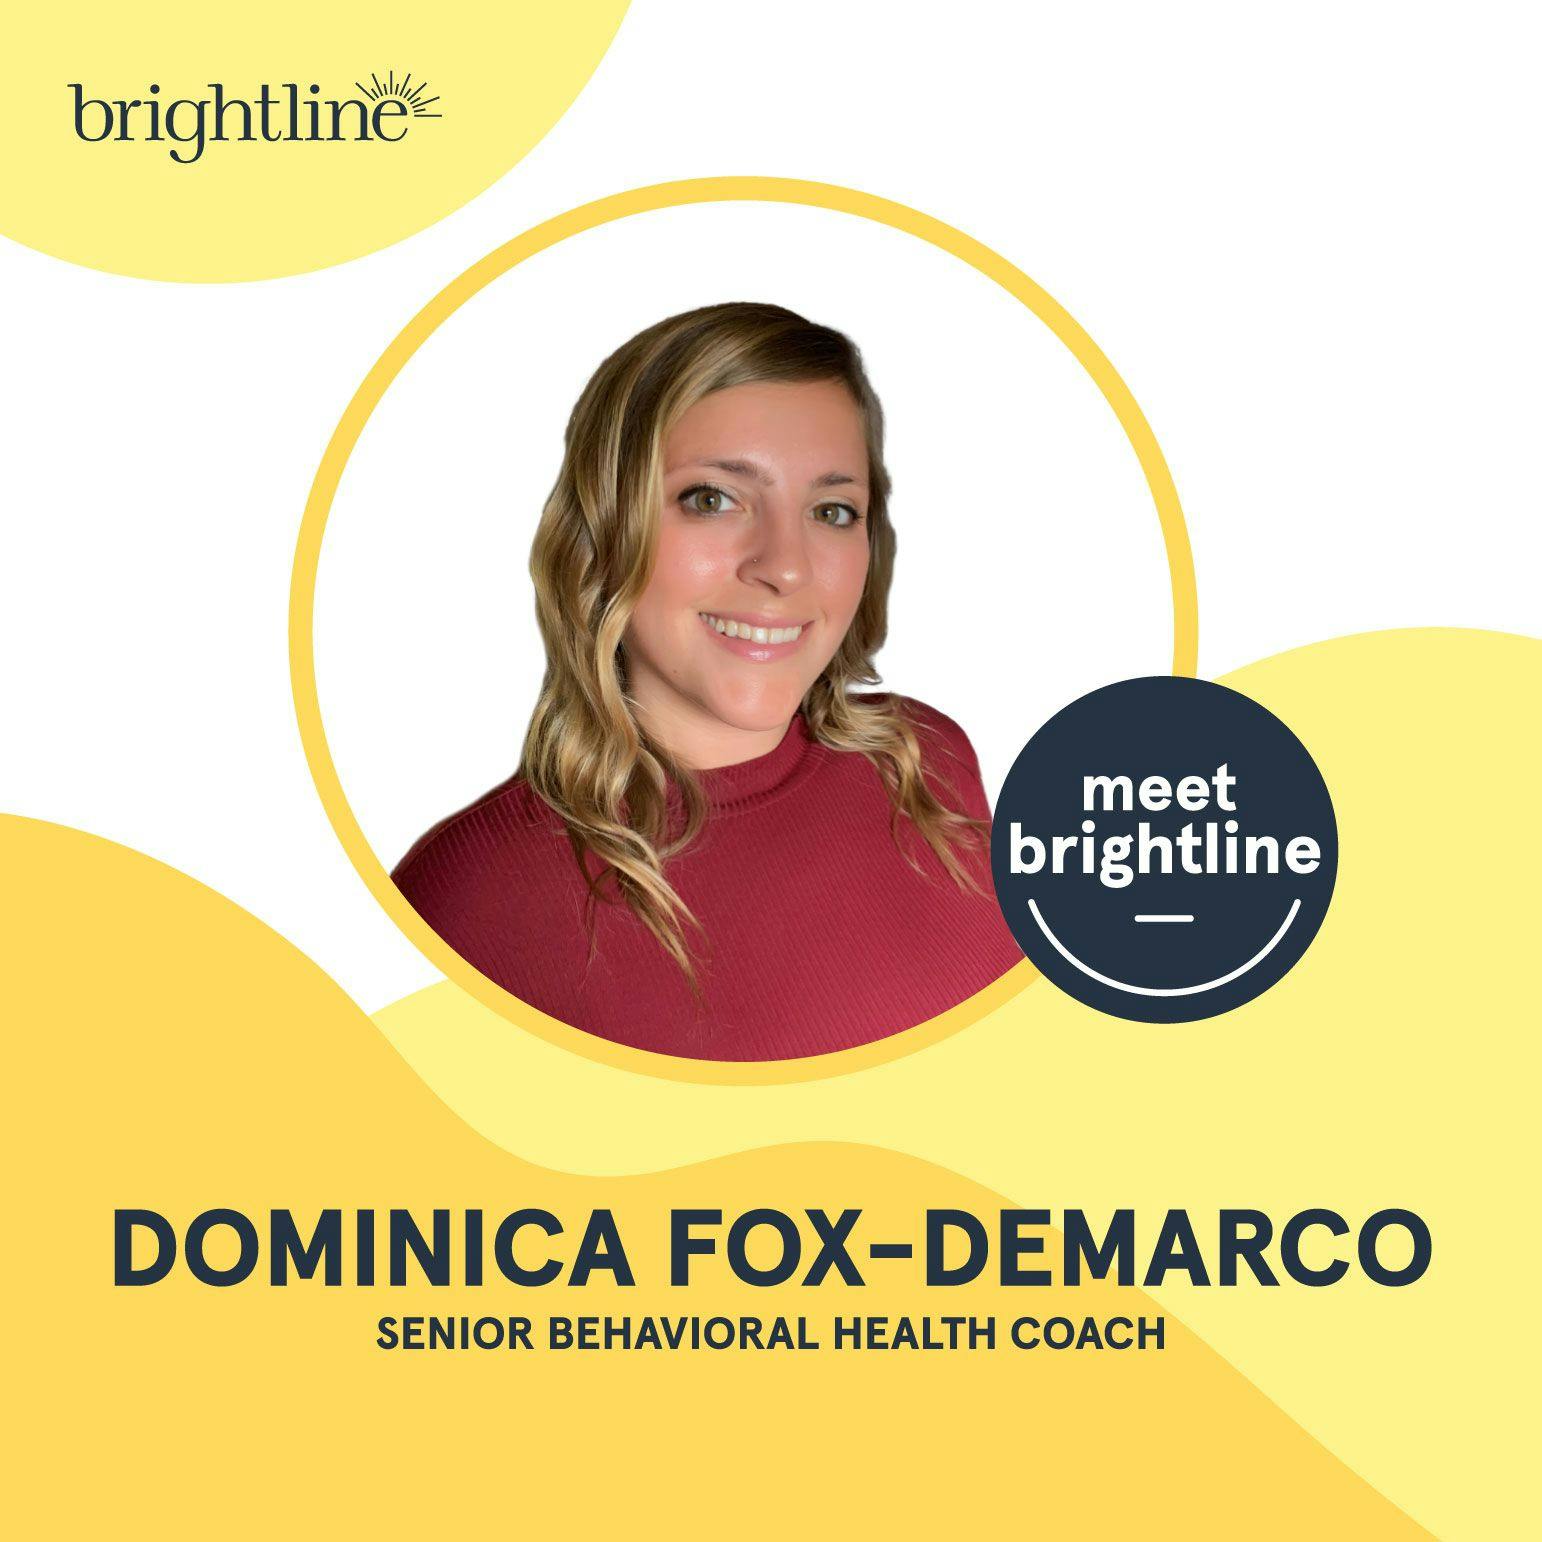 Dominica Fox-DeMarco Brightline behavioral health coach